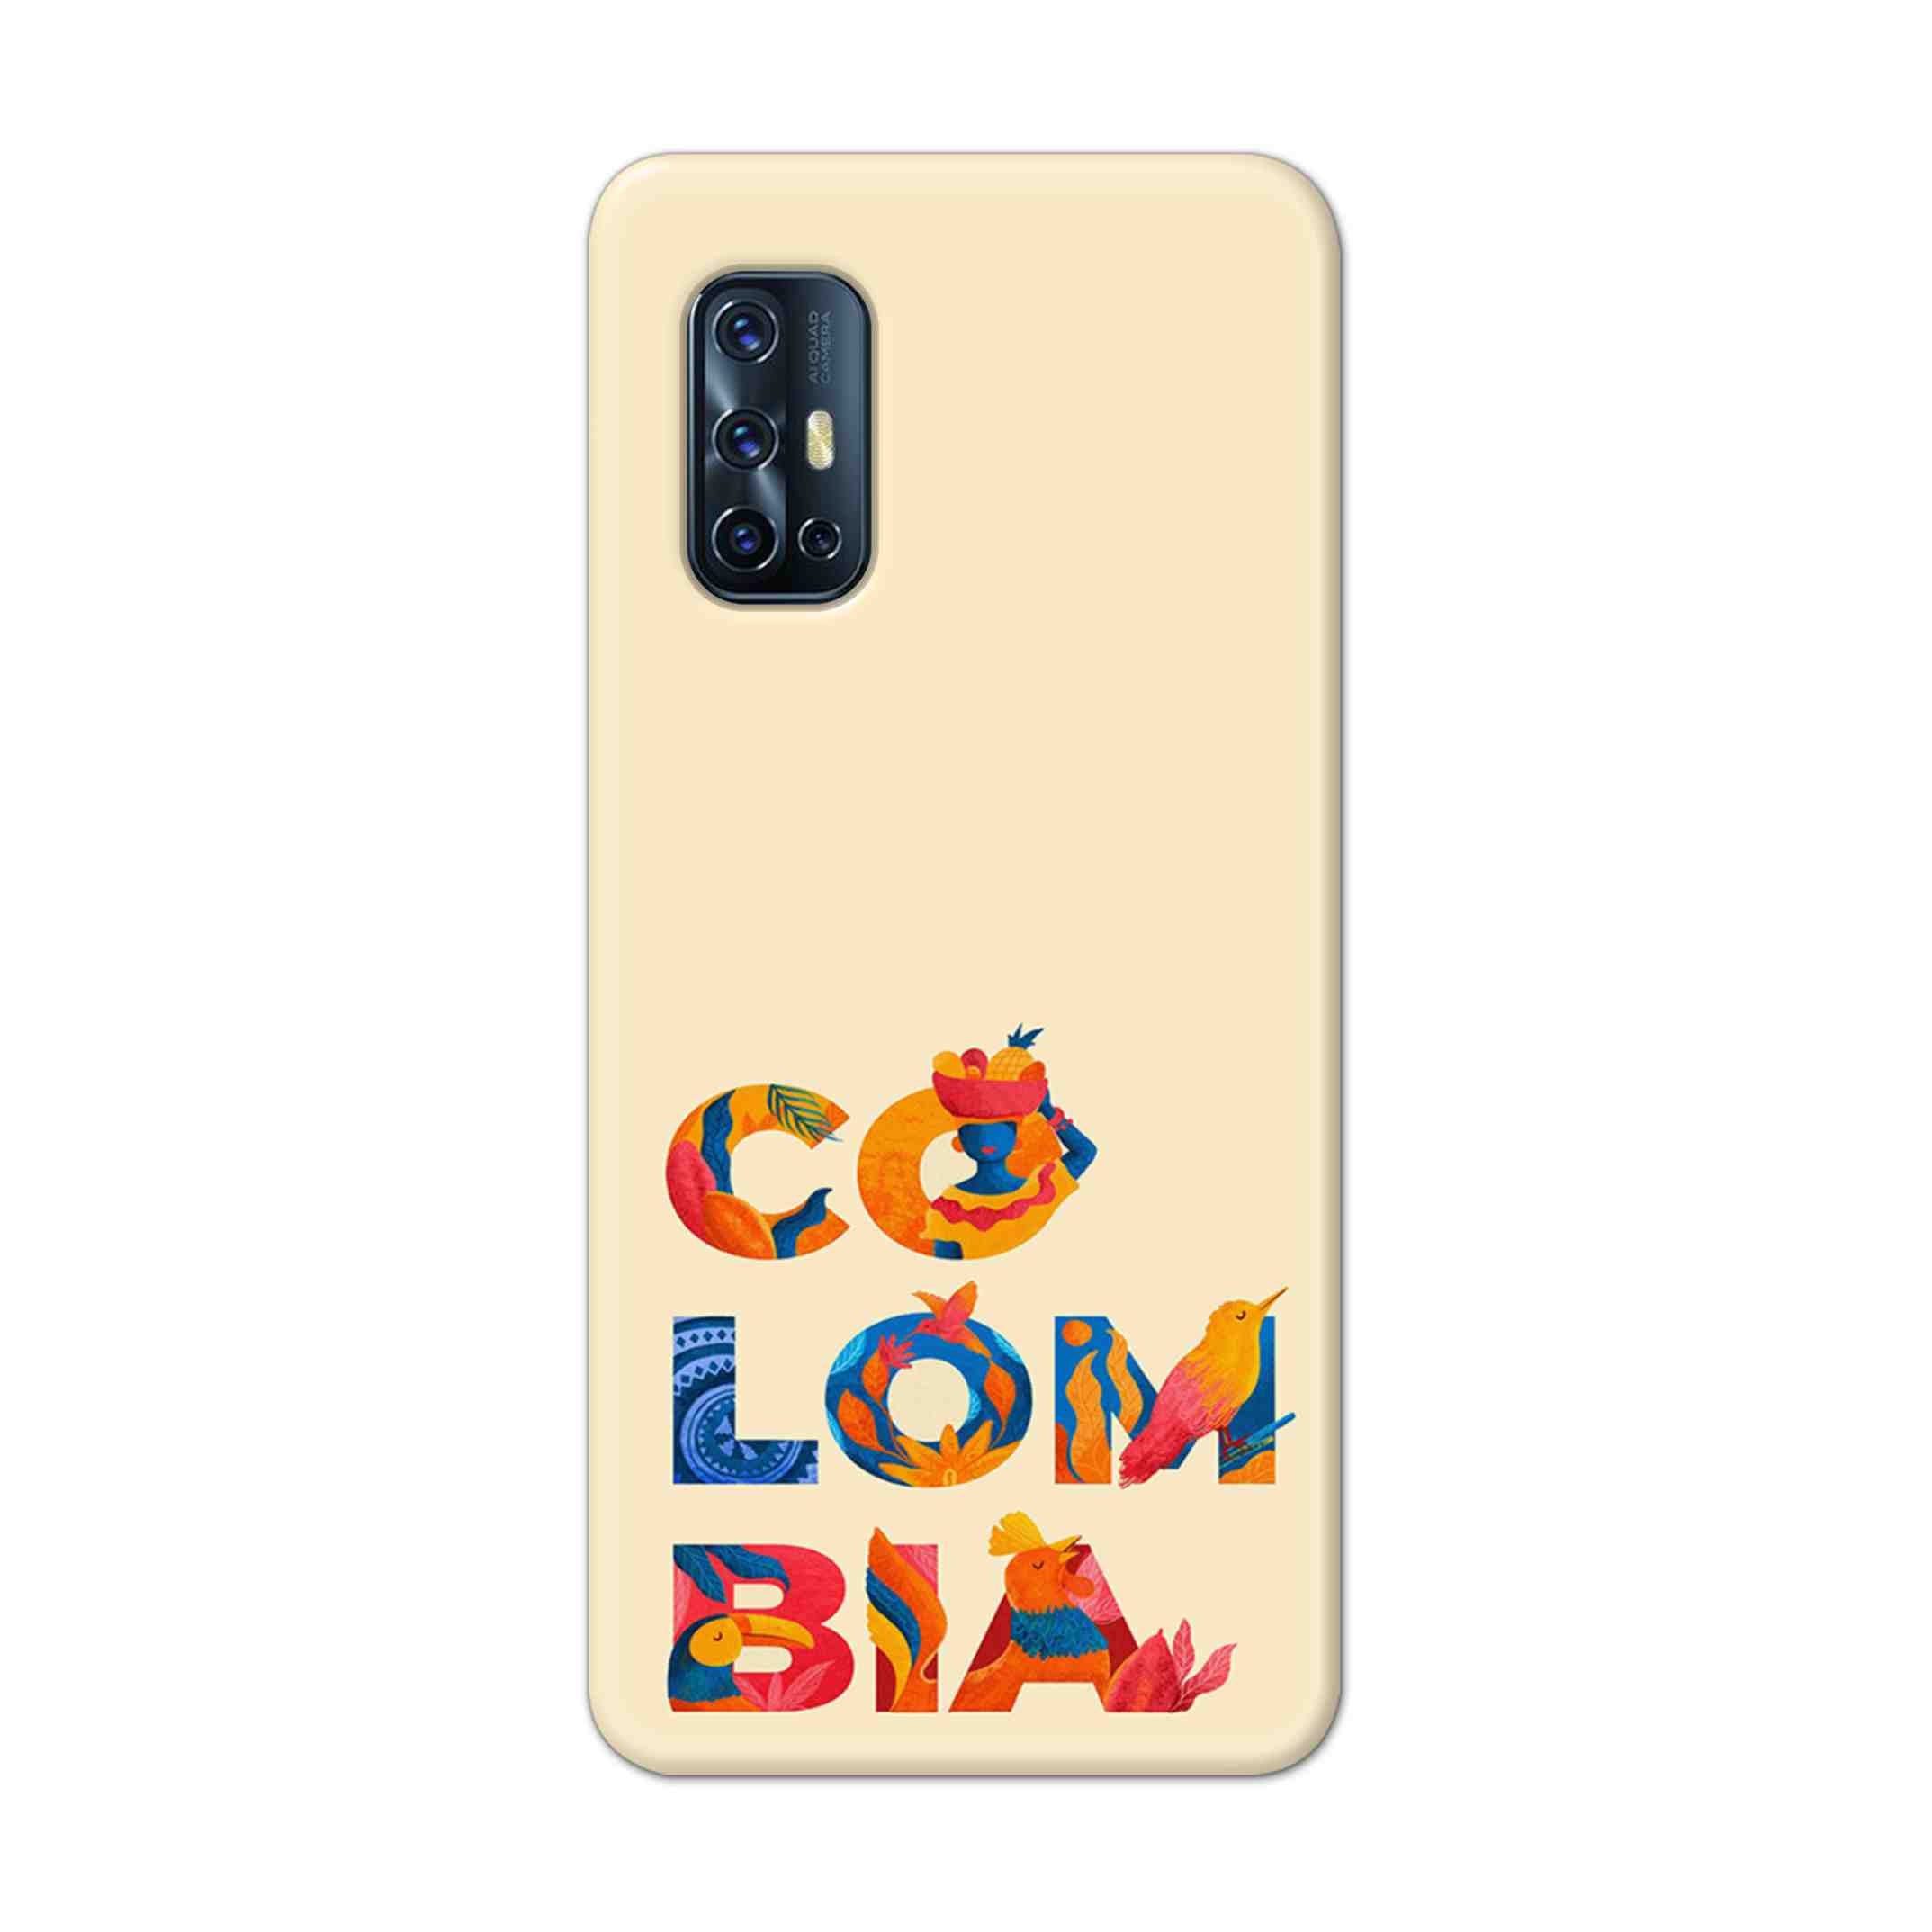 Buy Colombia Hard Back Mobile Phone Case Cover For Vivo V17 Online